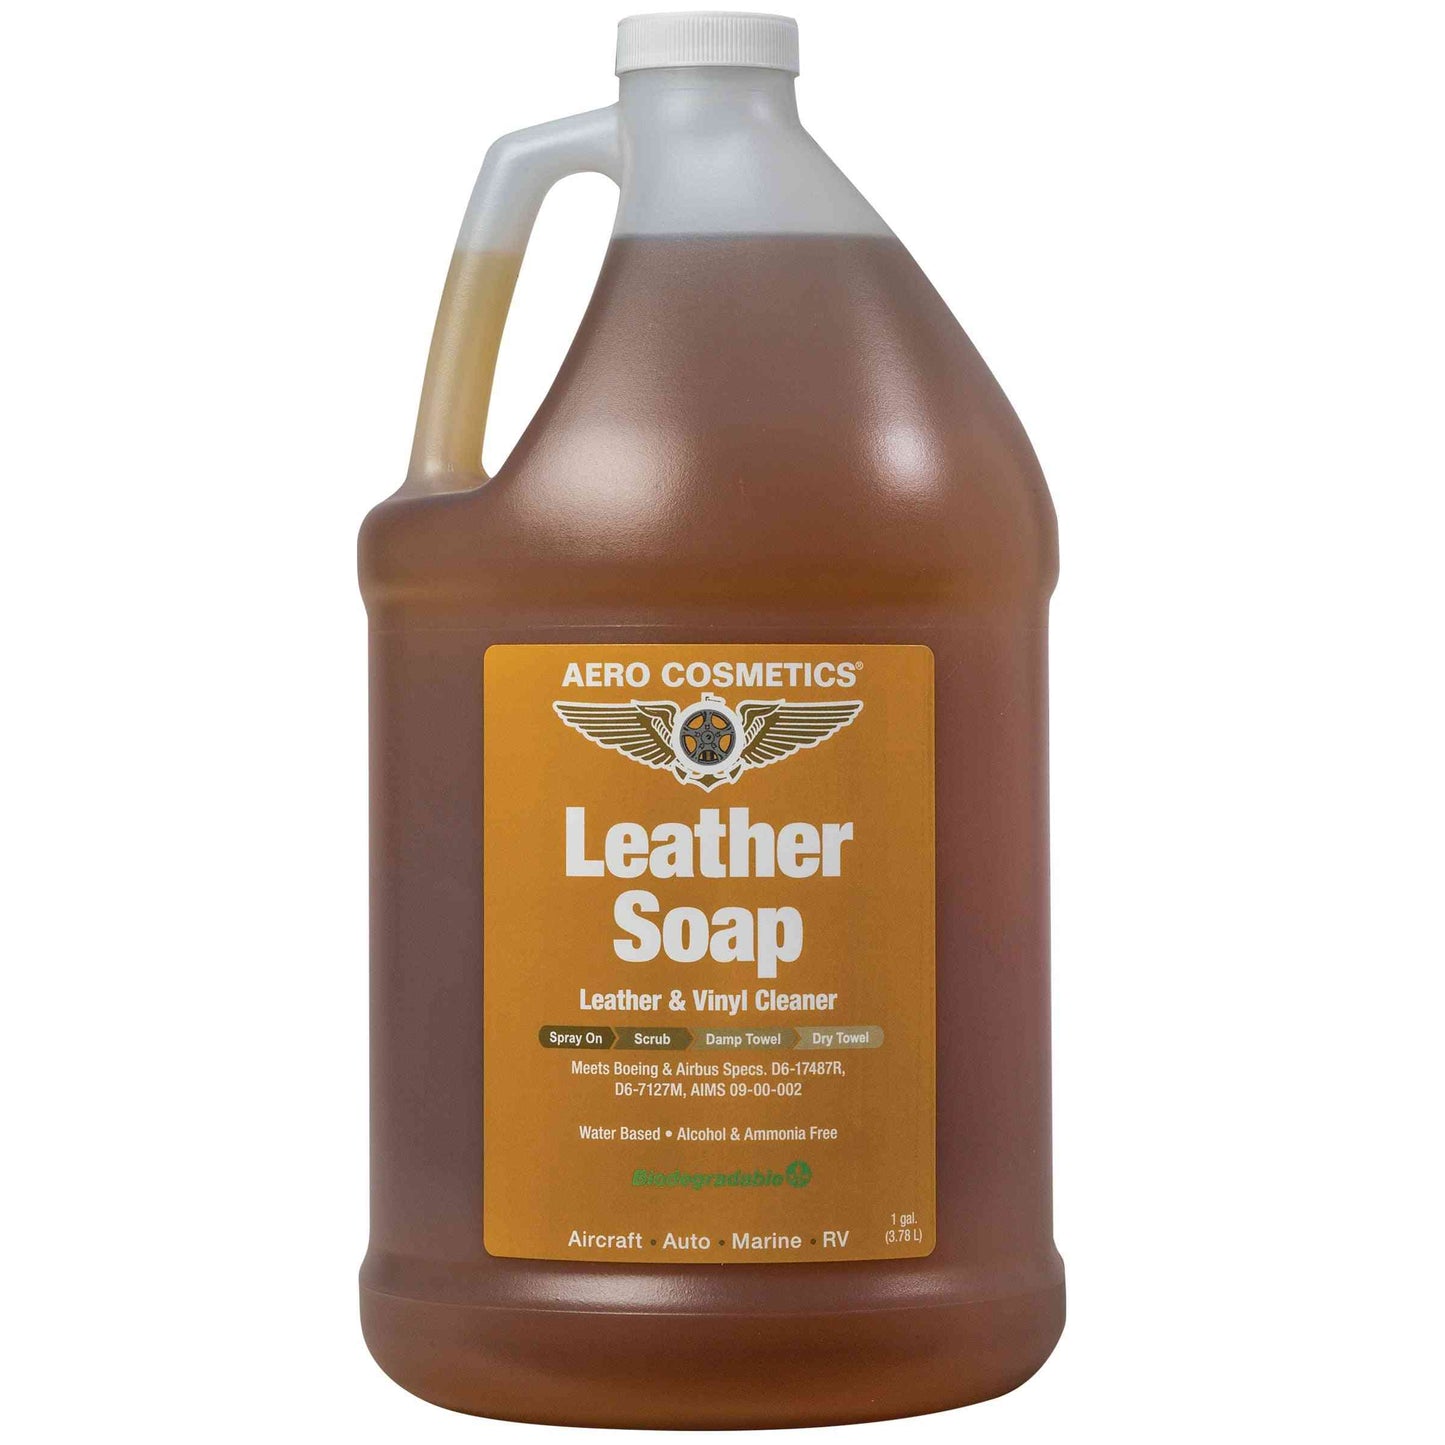 Leather Soap 1 Gallon, Aero Cosmetics, aircraft, car, rv, boat, motorcycle, waterless wash 